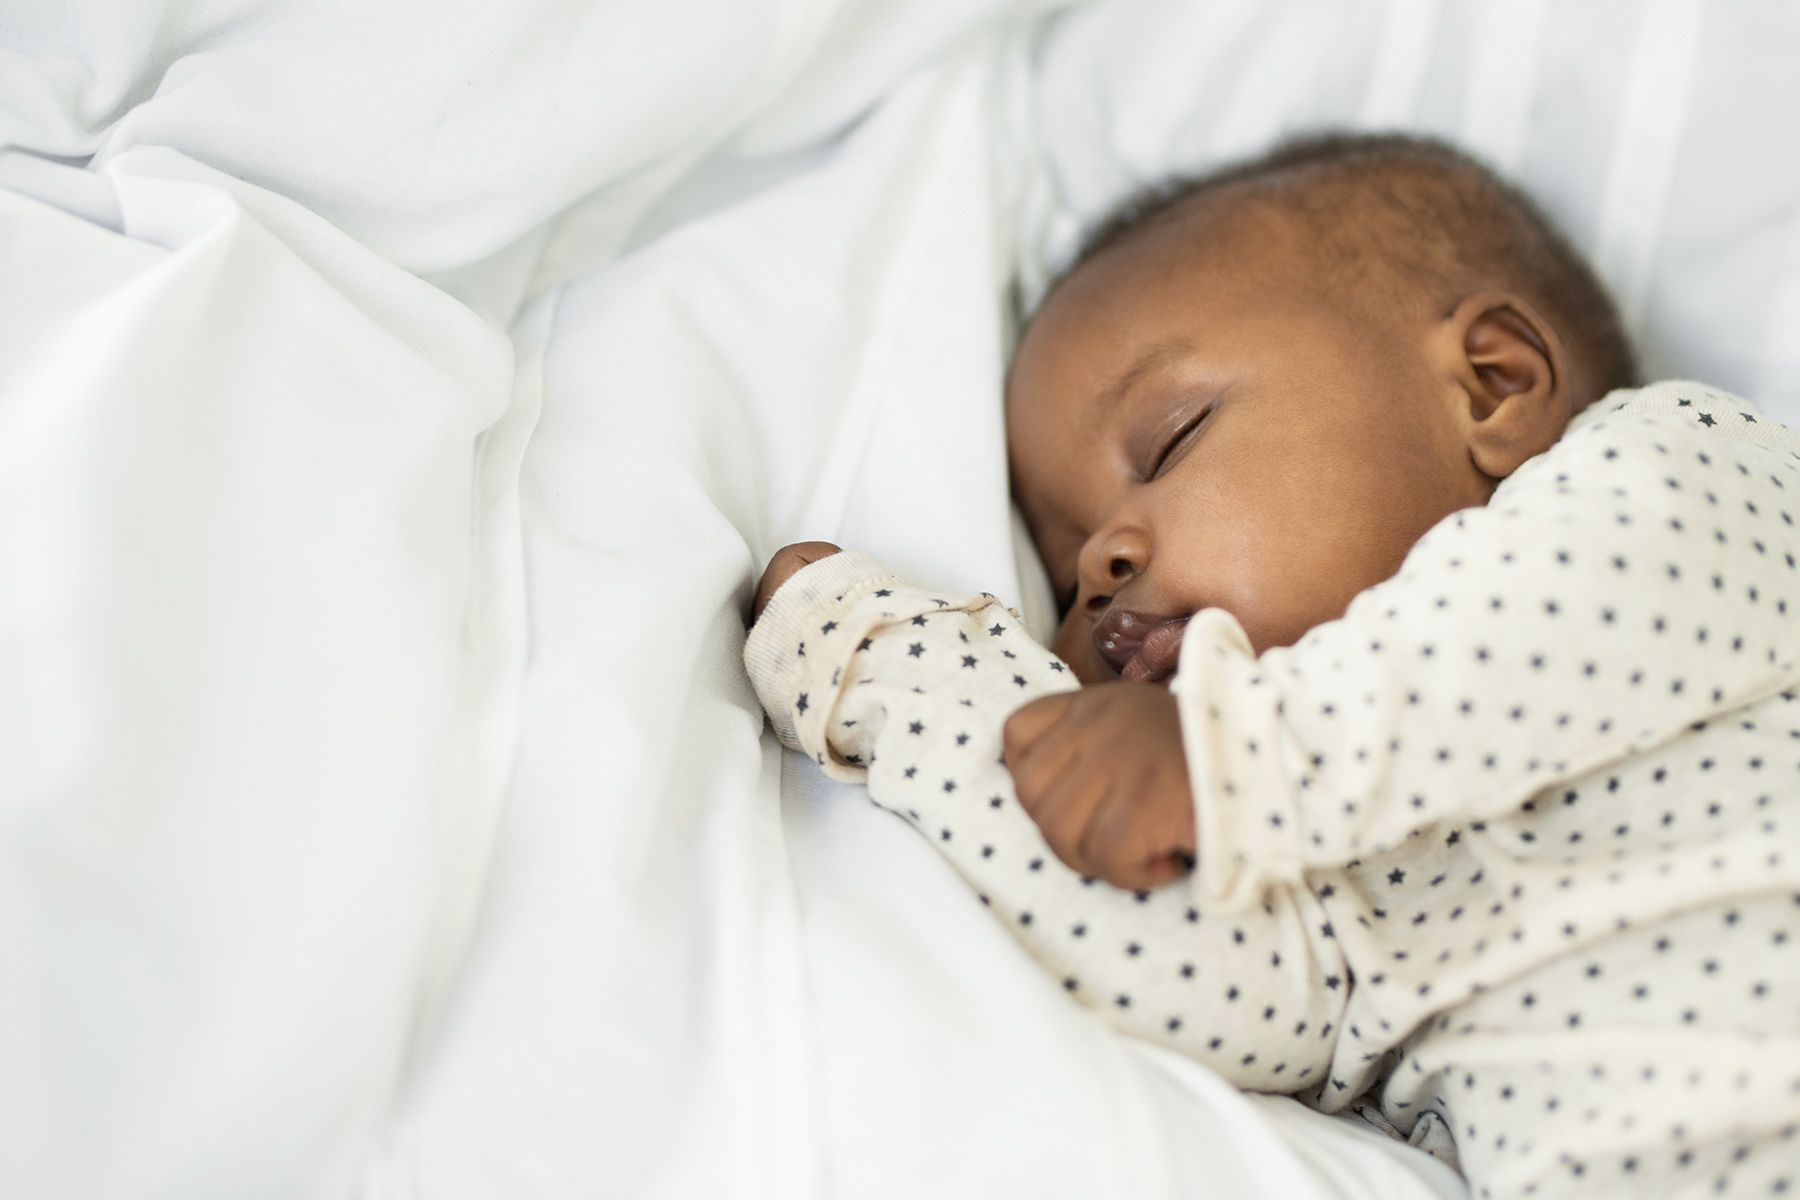 Why Do Black, Hispanic Newborns Face Higher Health Risks?